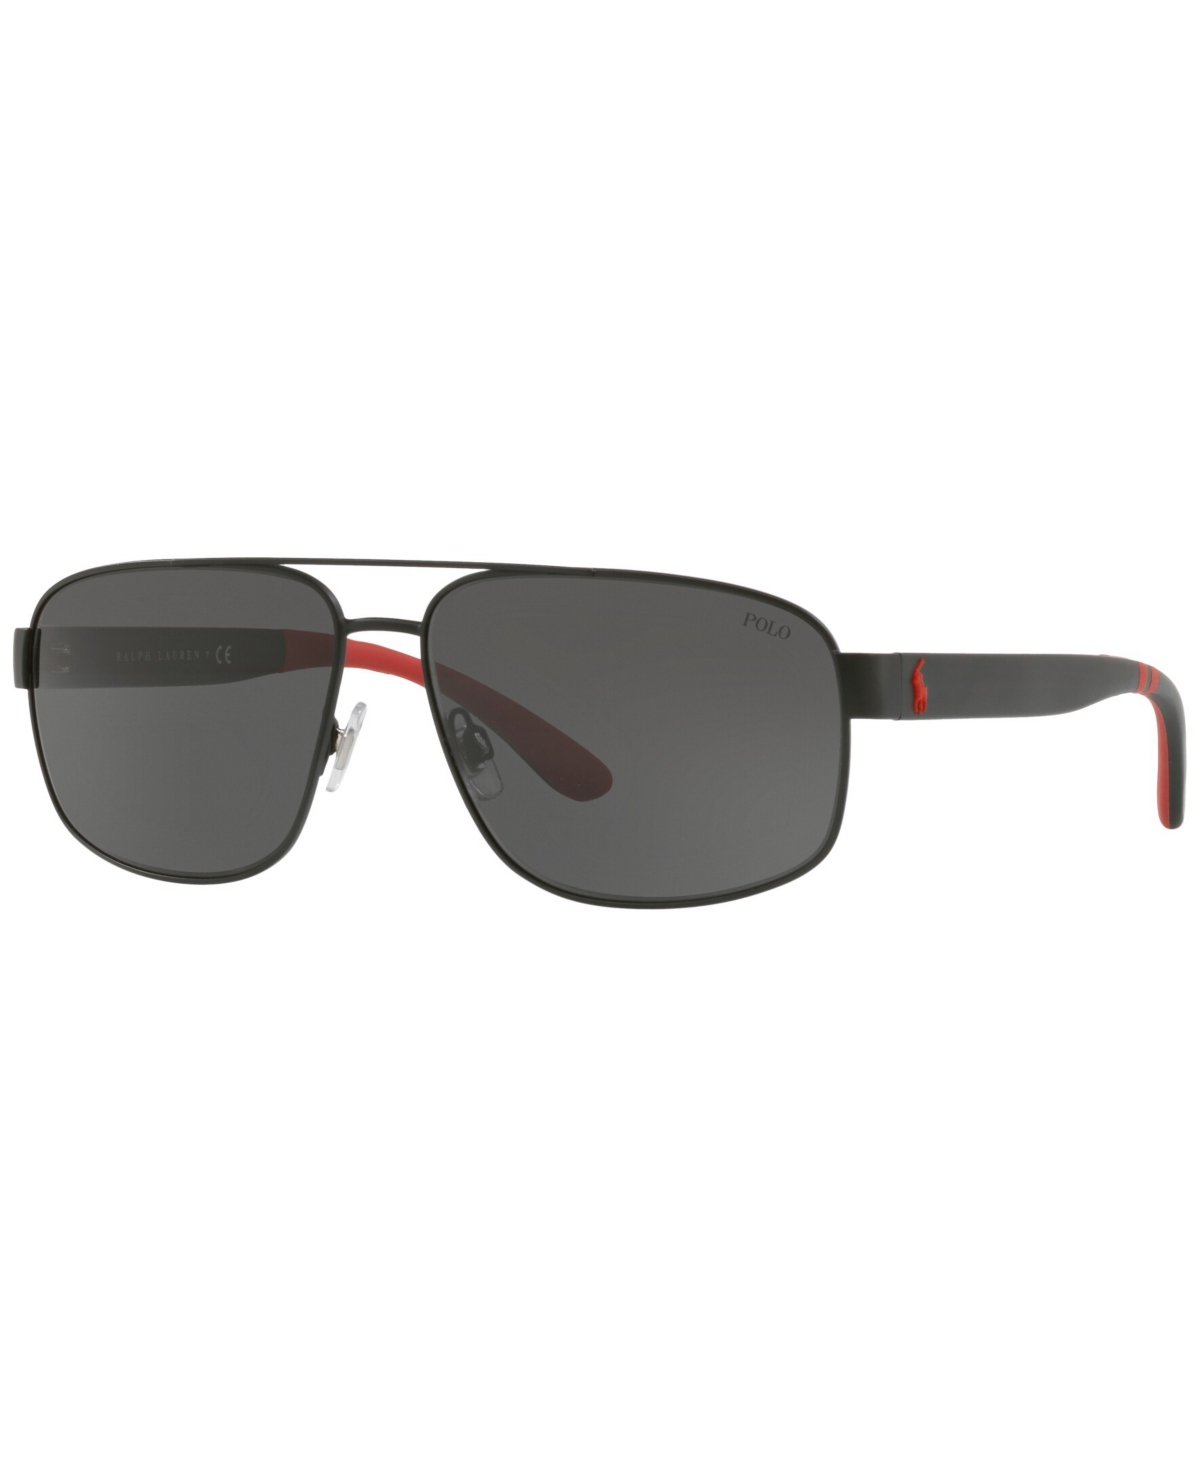 Polo Ralph Lauren Men's Sunglasses, Ph3112 In Matte Black